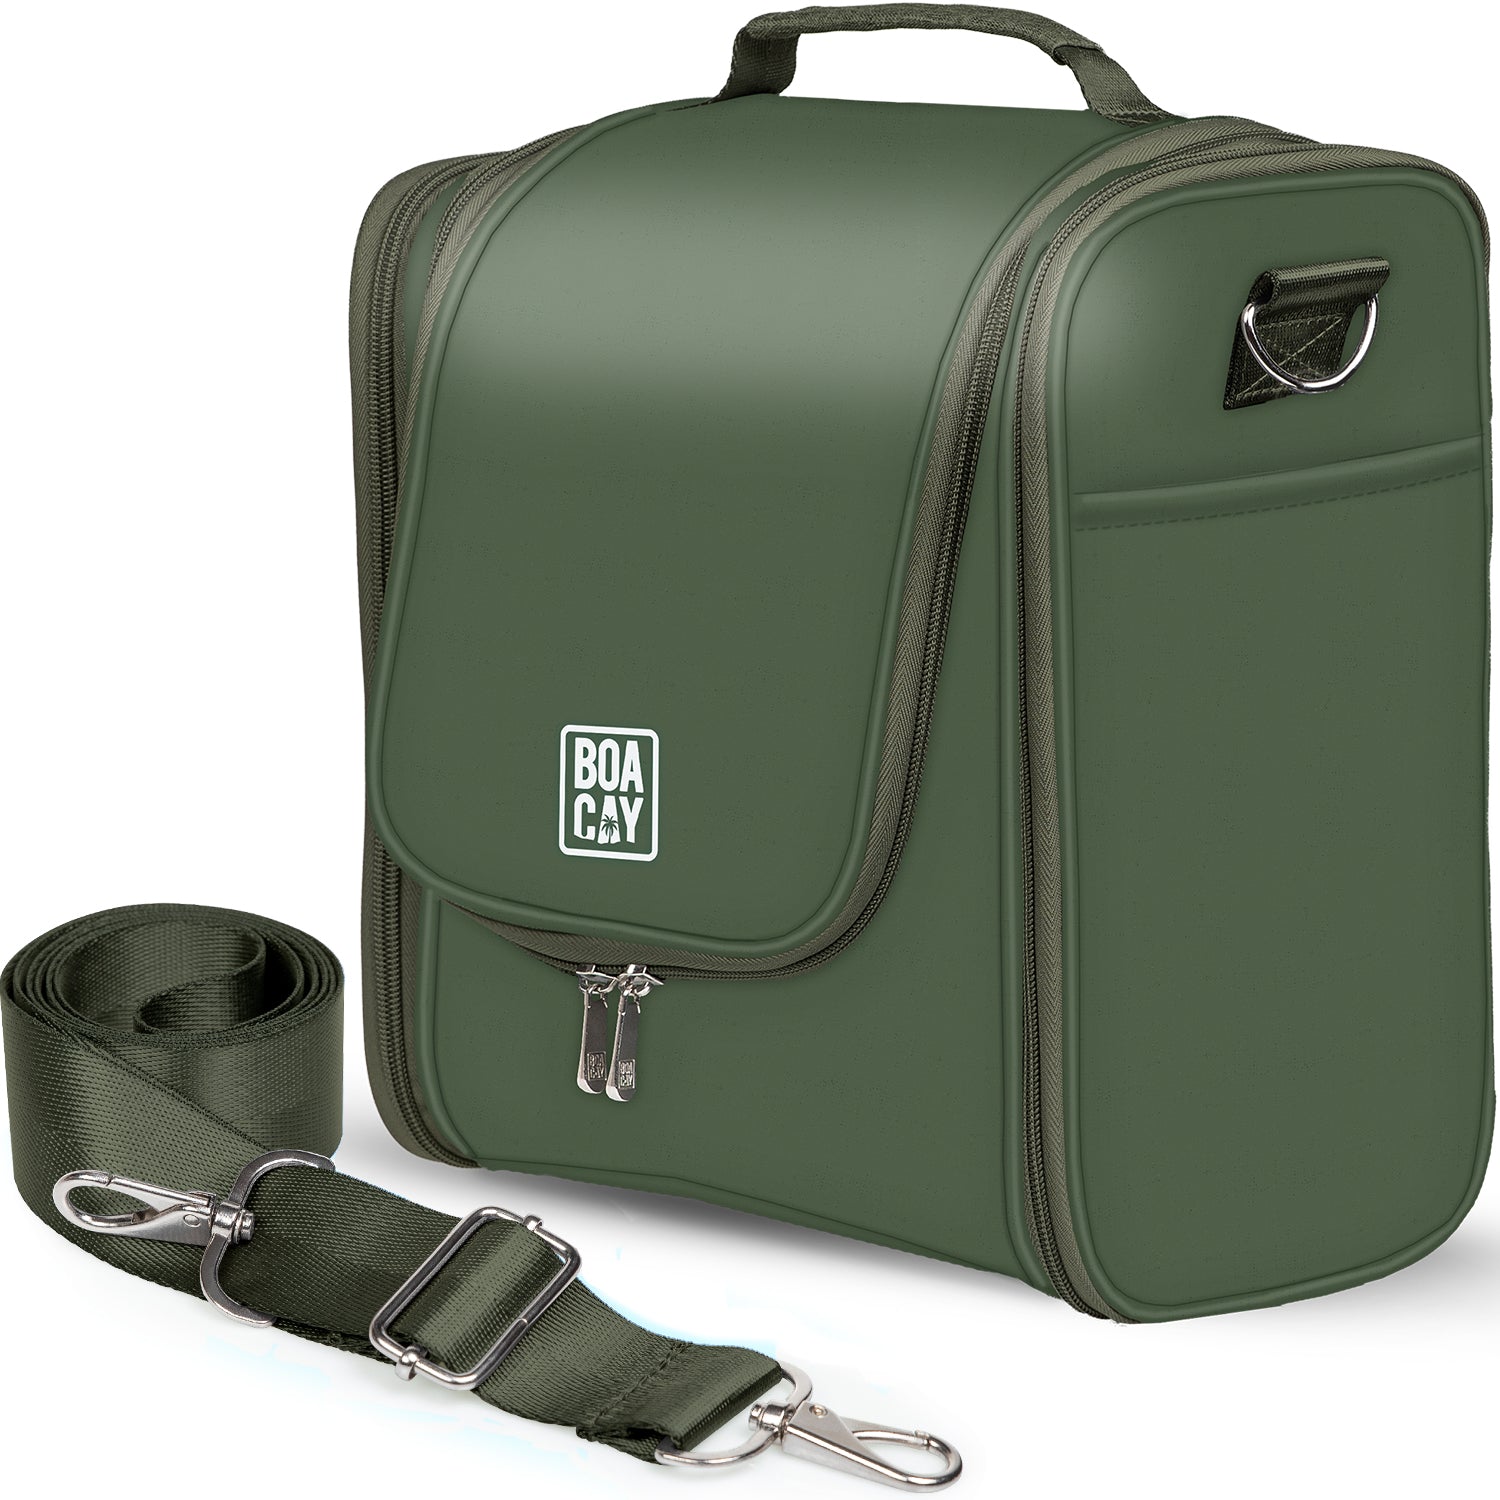 Buy Toiletry Bag Army Green, Yeiotsy Ultra-Light Mini Toiletry Bag